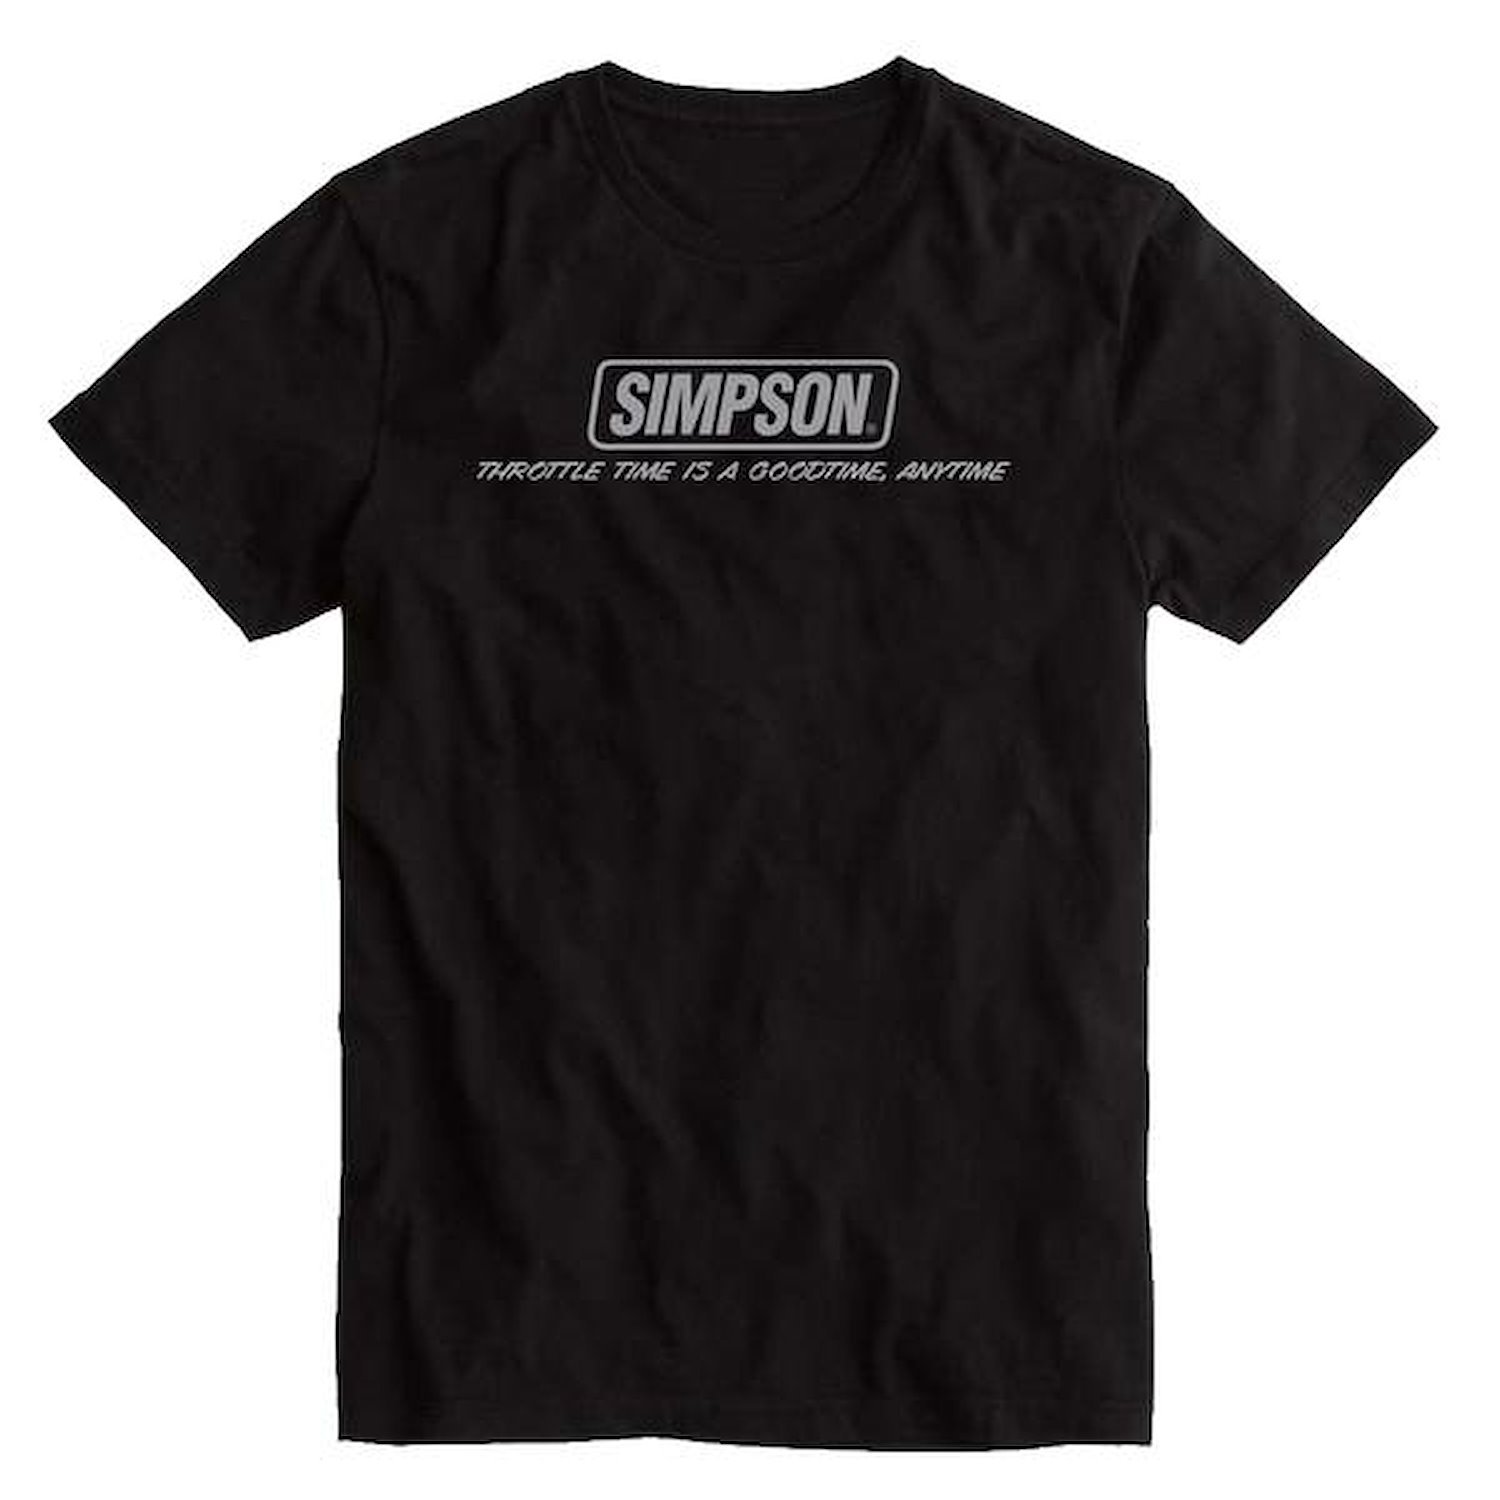 Simpson Throttle Time T-Shirt